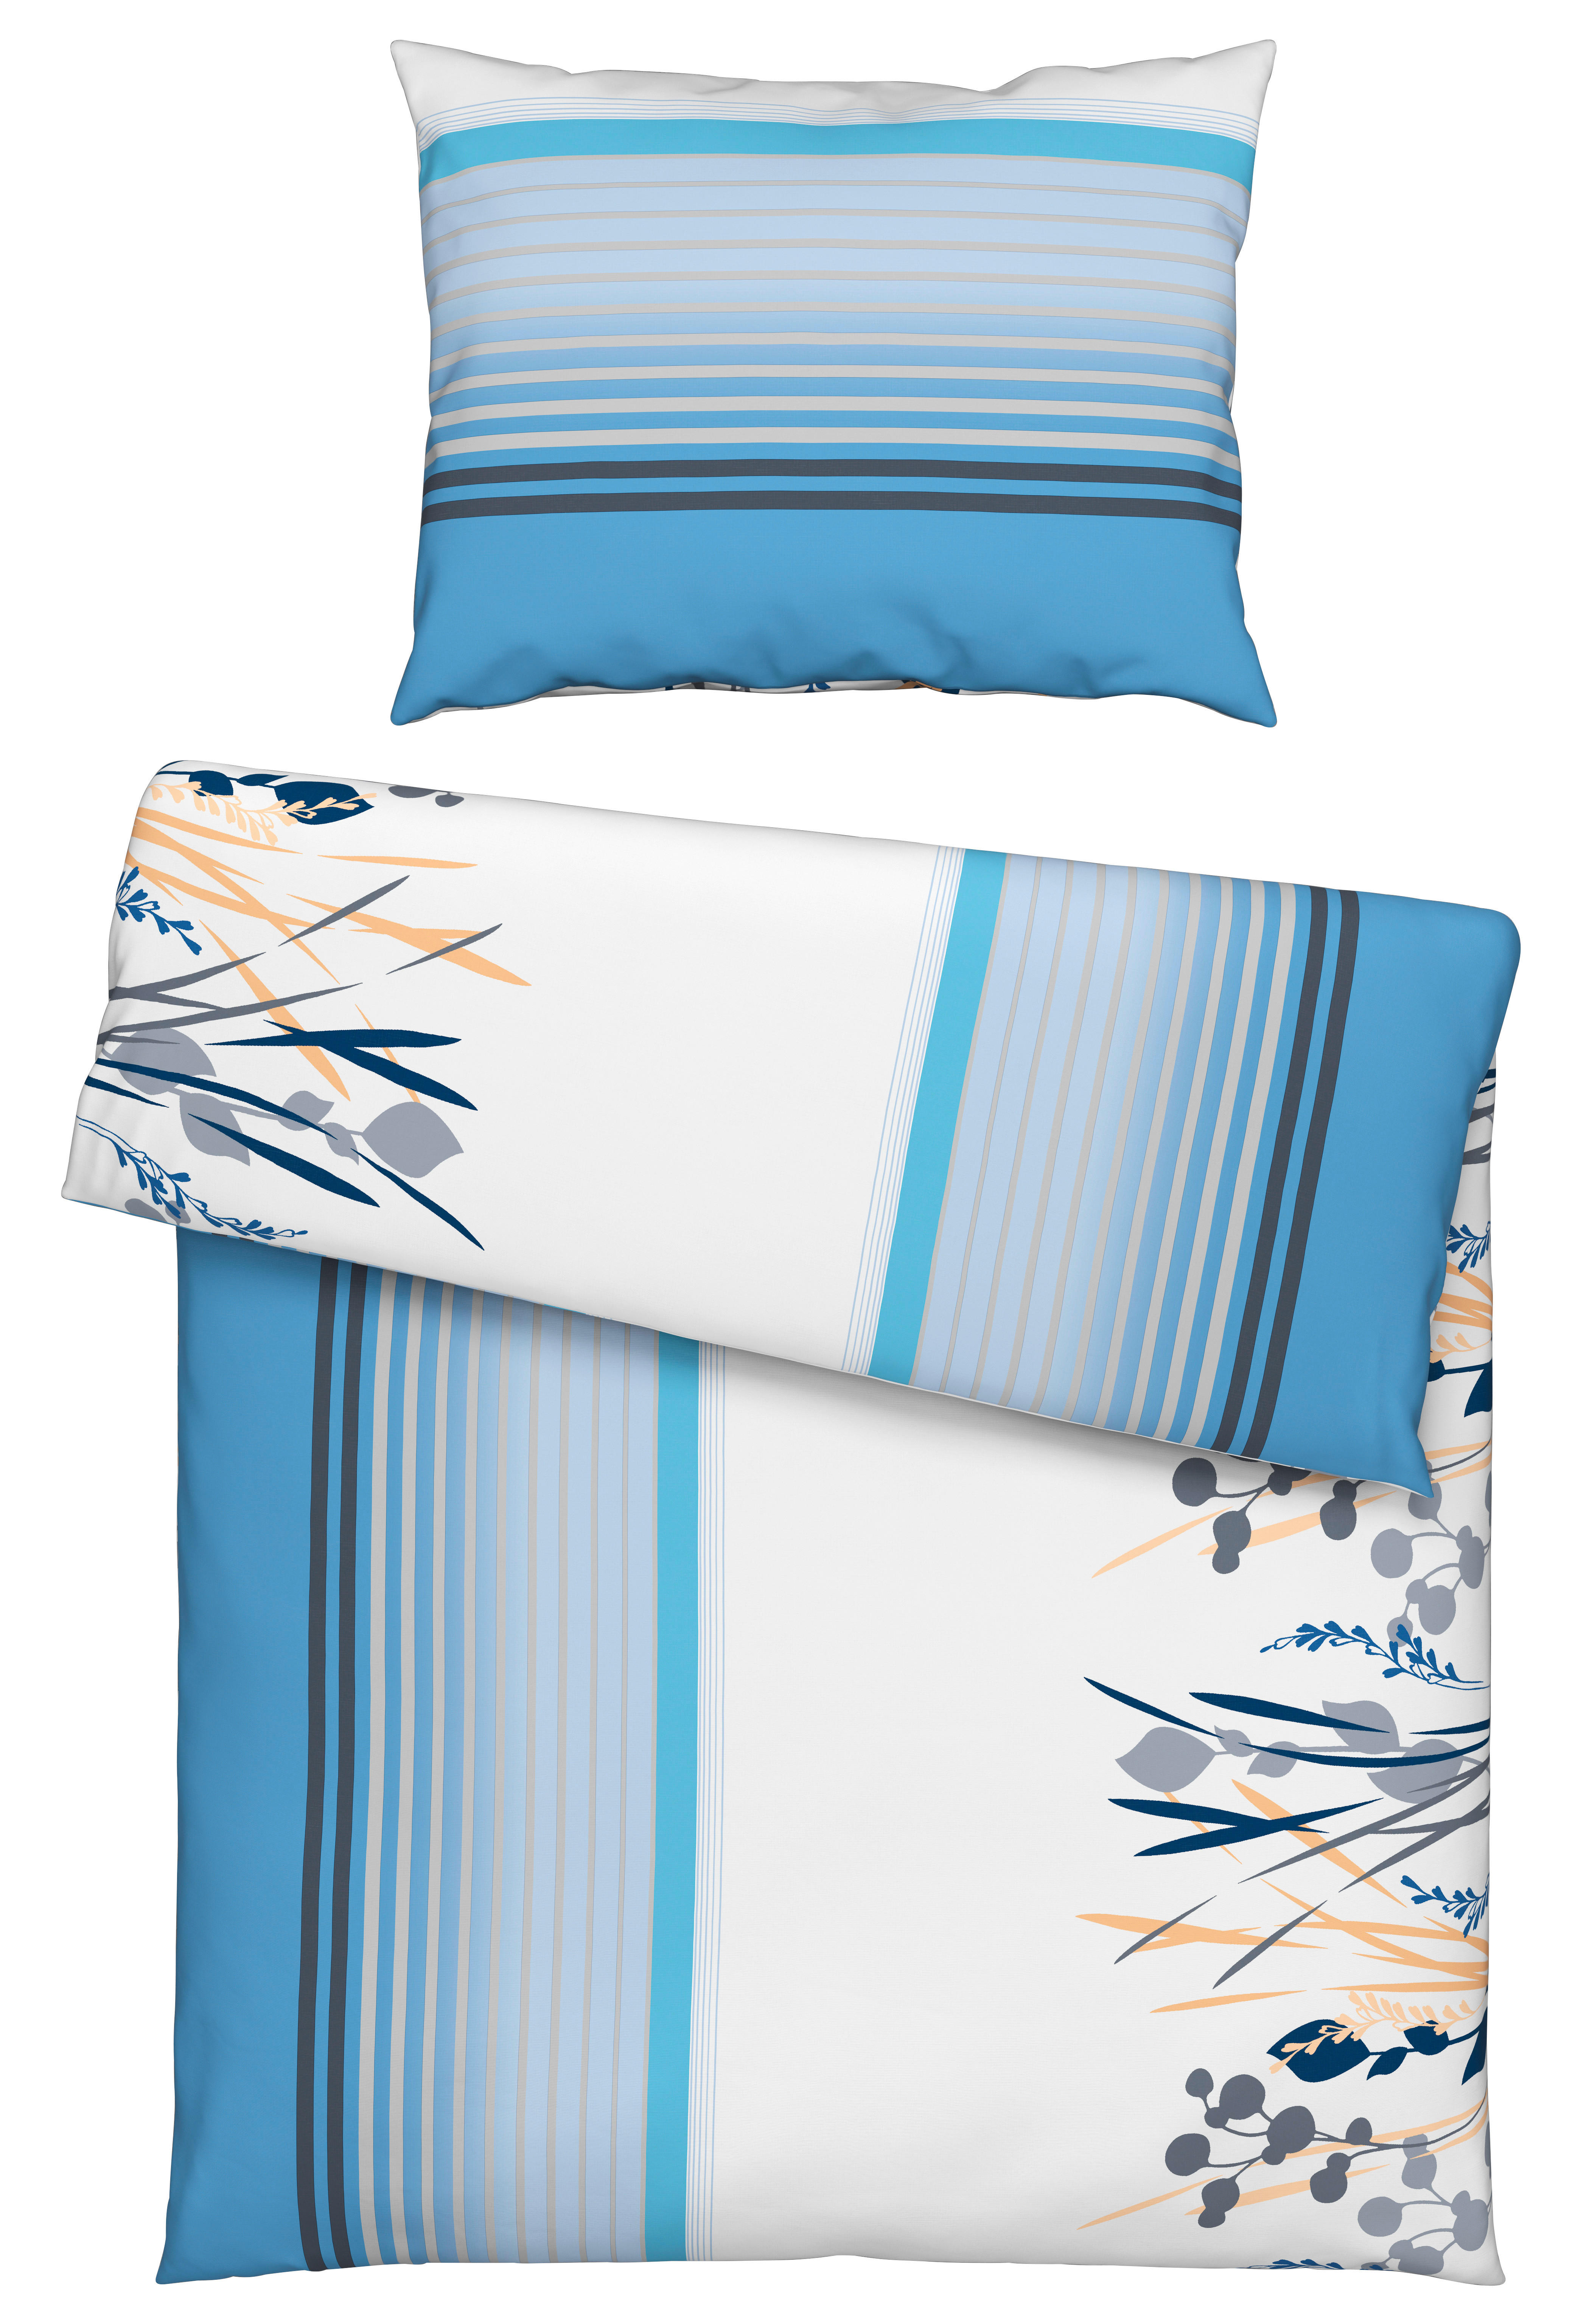 POSTEĽNÁ BIELIZEŇ, renforcé, modrá, 140/200 cm - modrá, Konventionell, textil (140/200cm) - Esposa